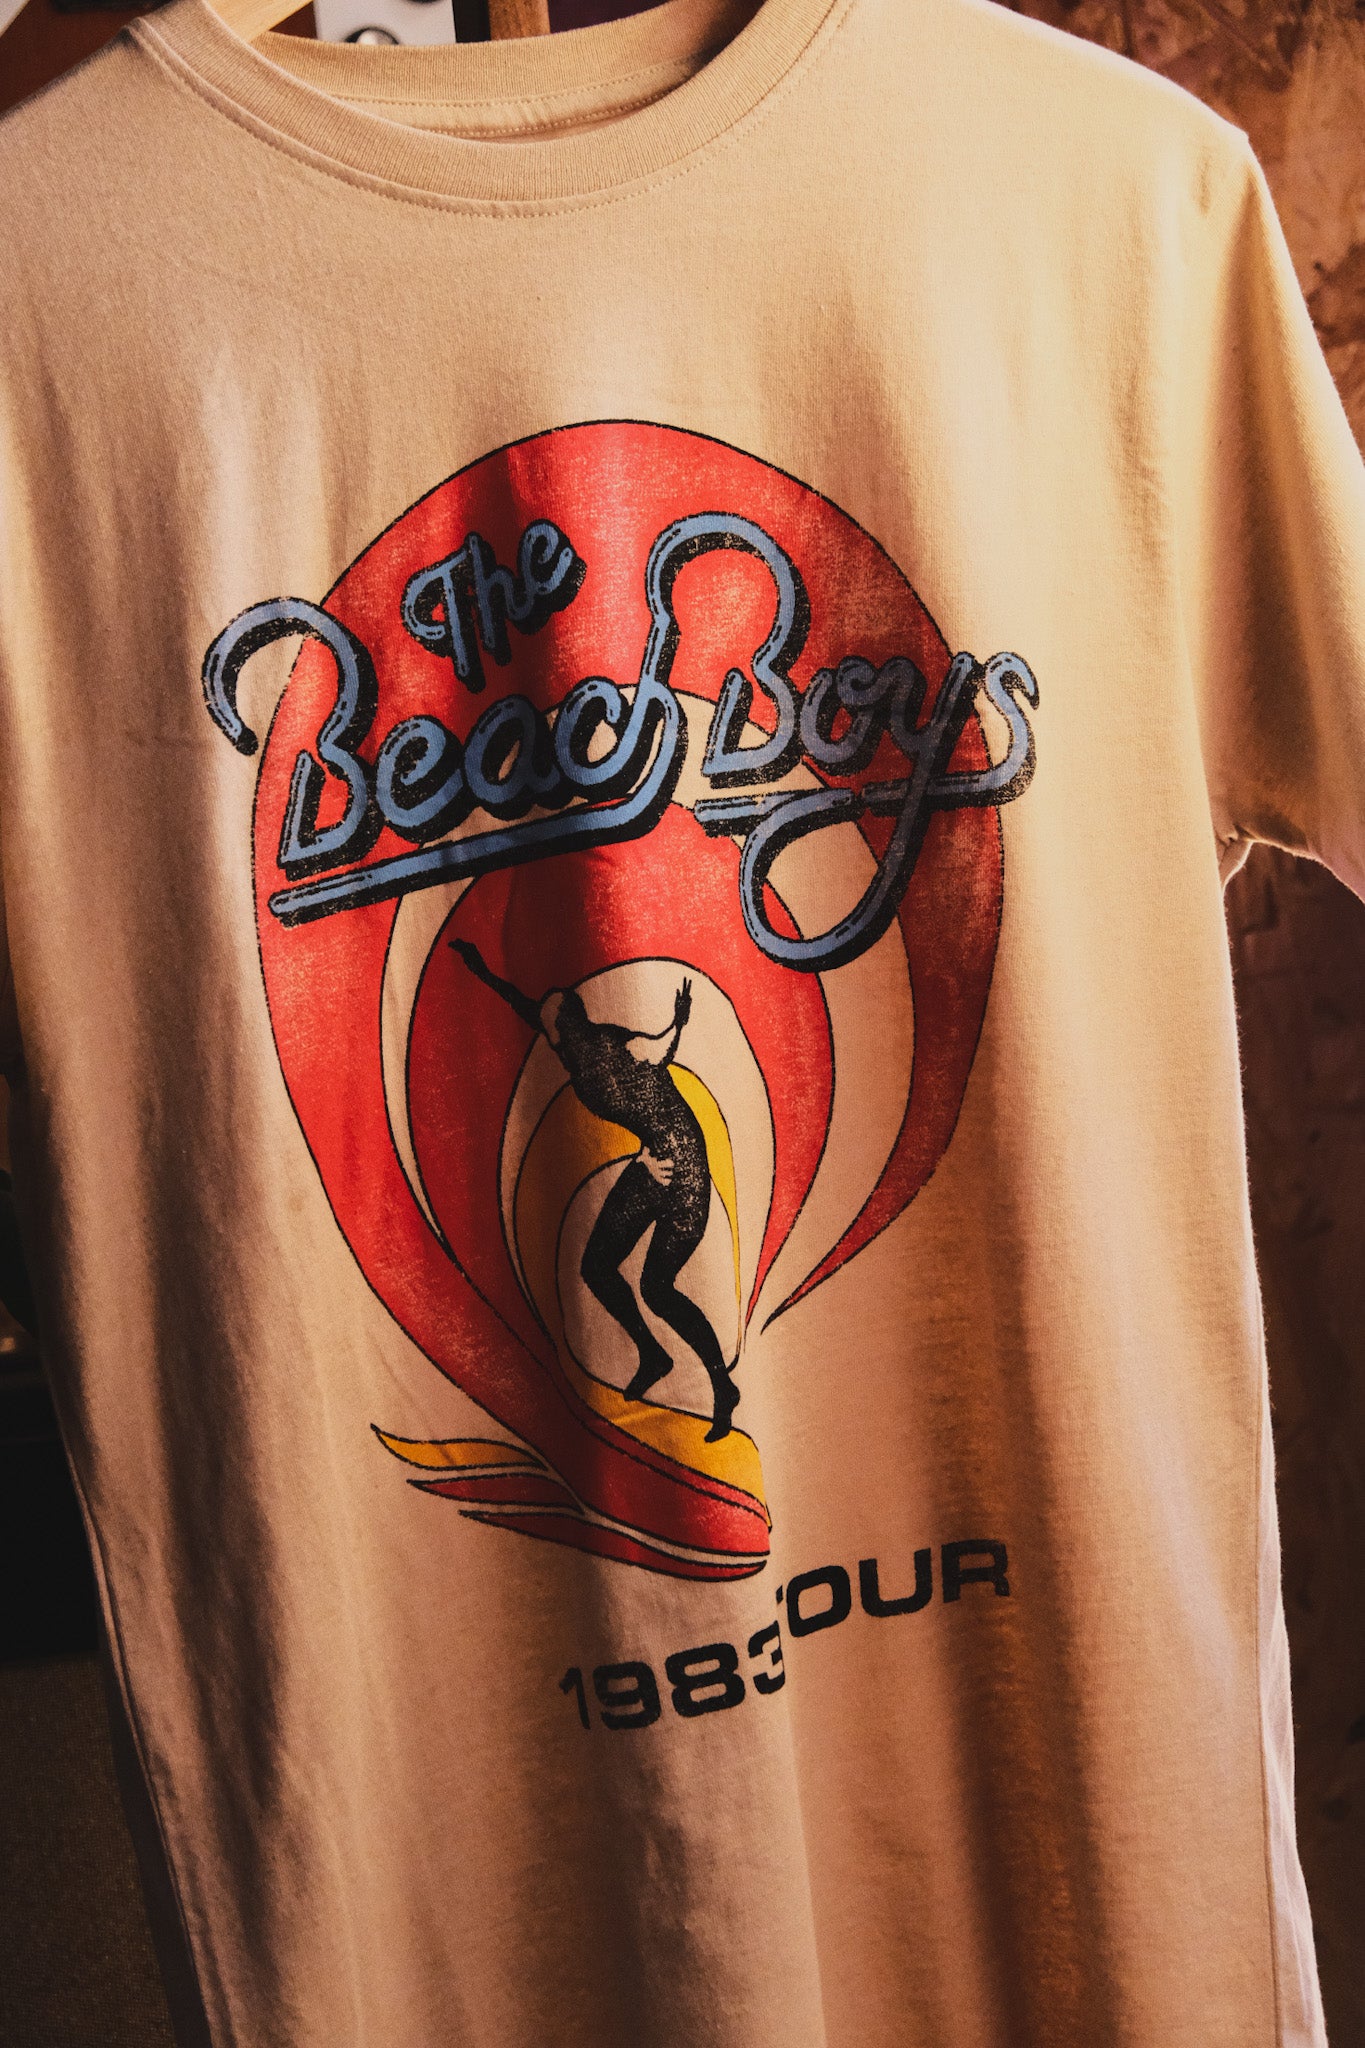 The Beach Boys '83 Tour T-Shirt Unisex